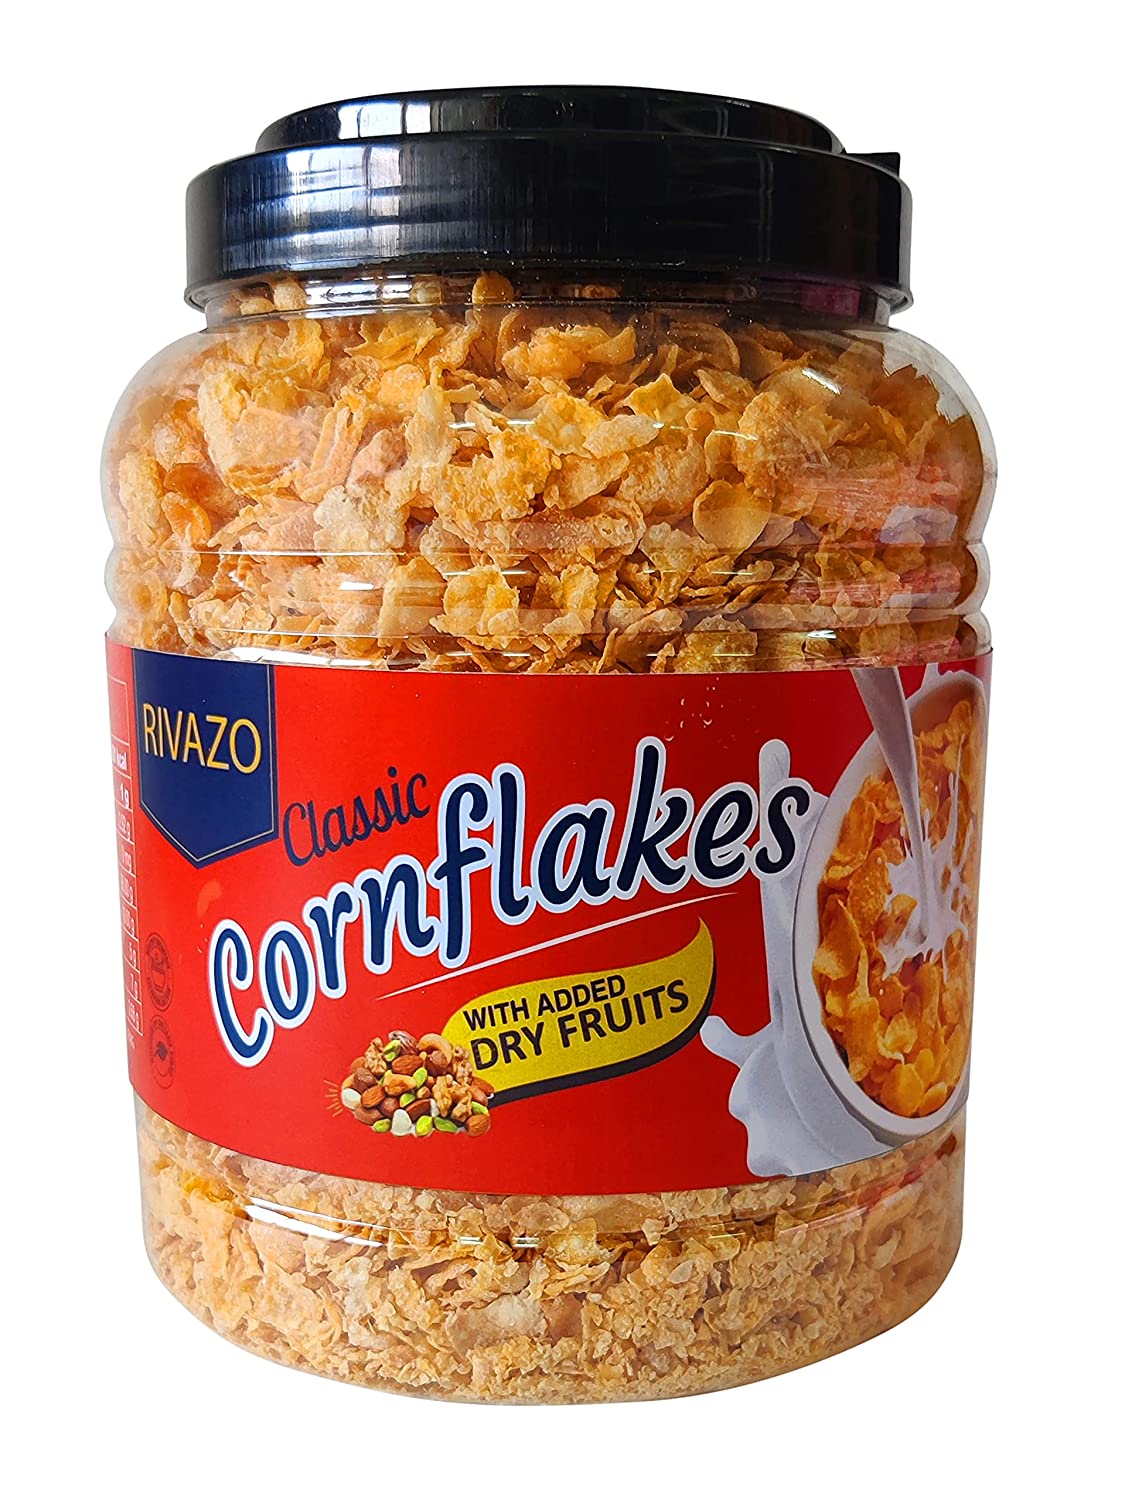 Rivazo Original Corn Flakes Image